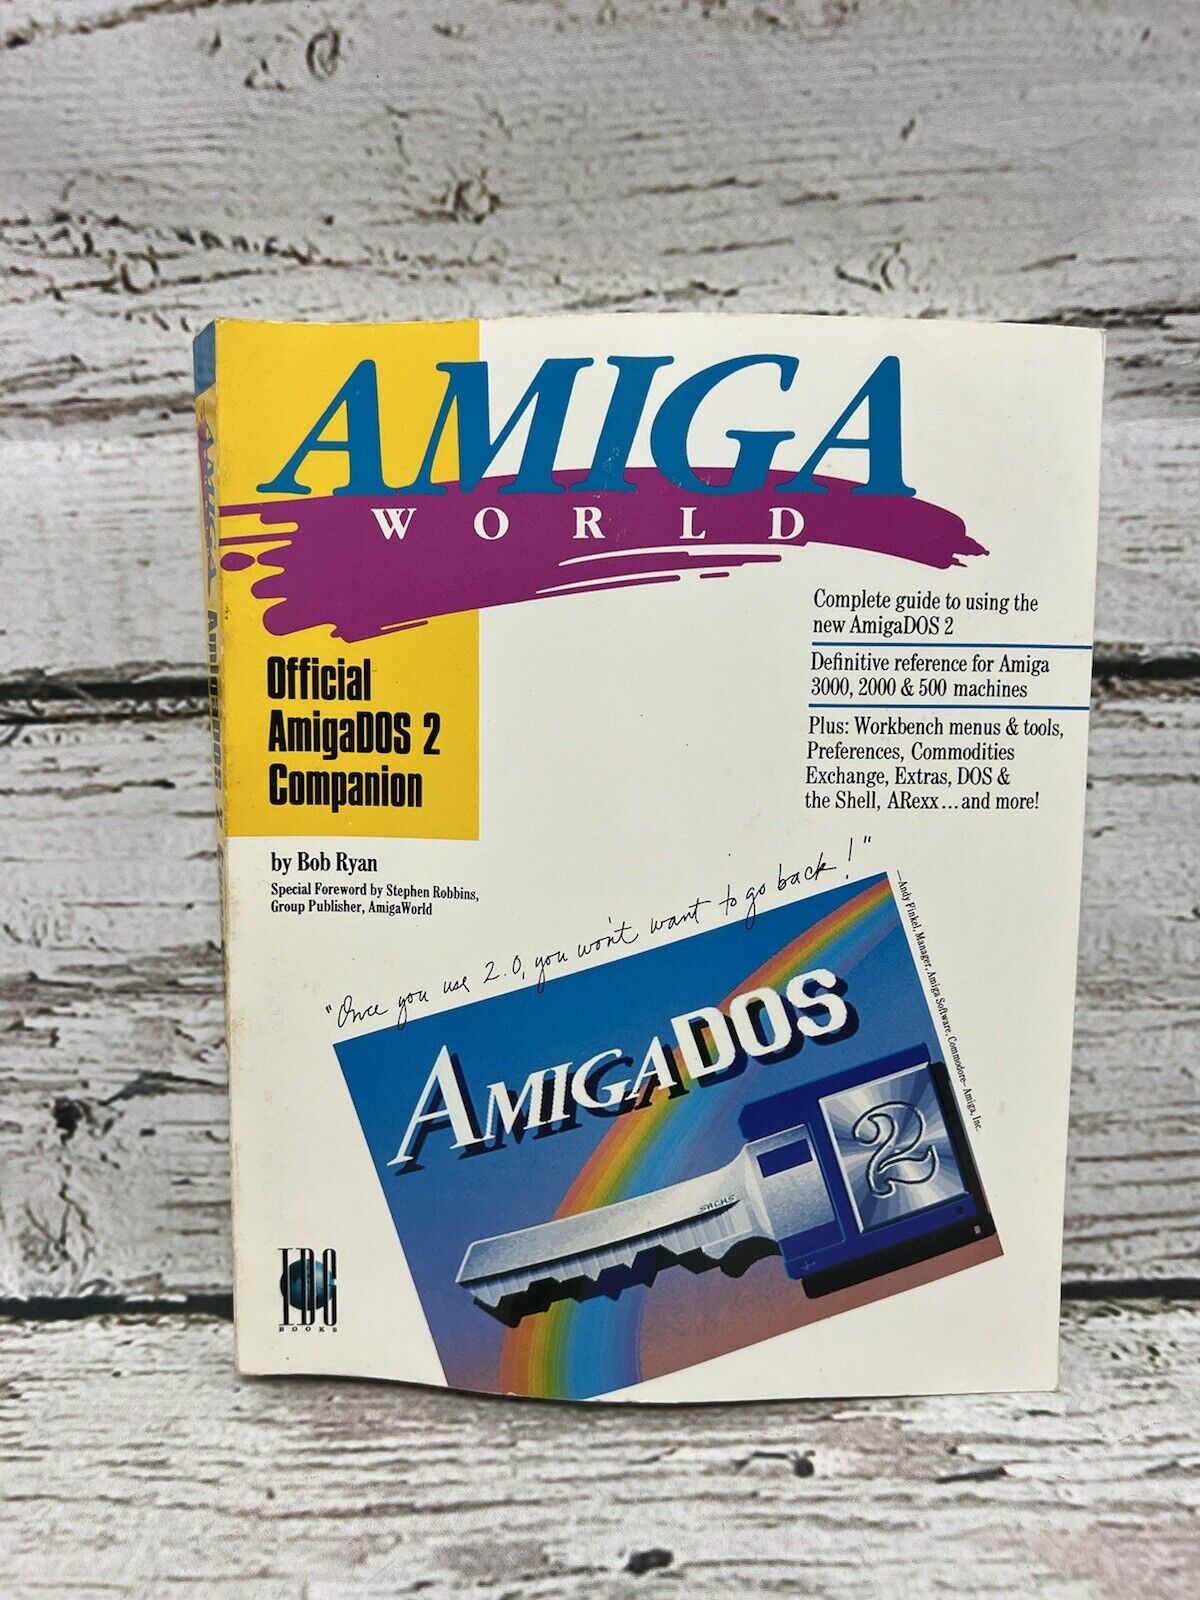 Amiga World Official AmigaDOS 2 Companion VTG 1990 Bob Ryan Paperback Book Guide